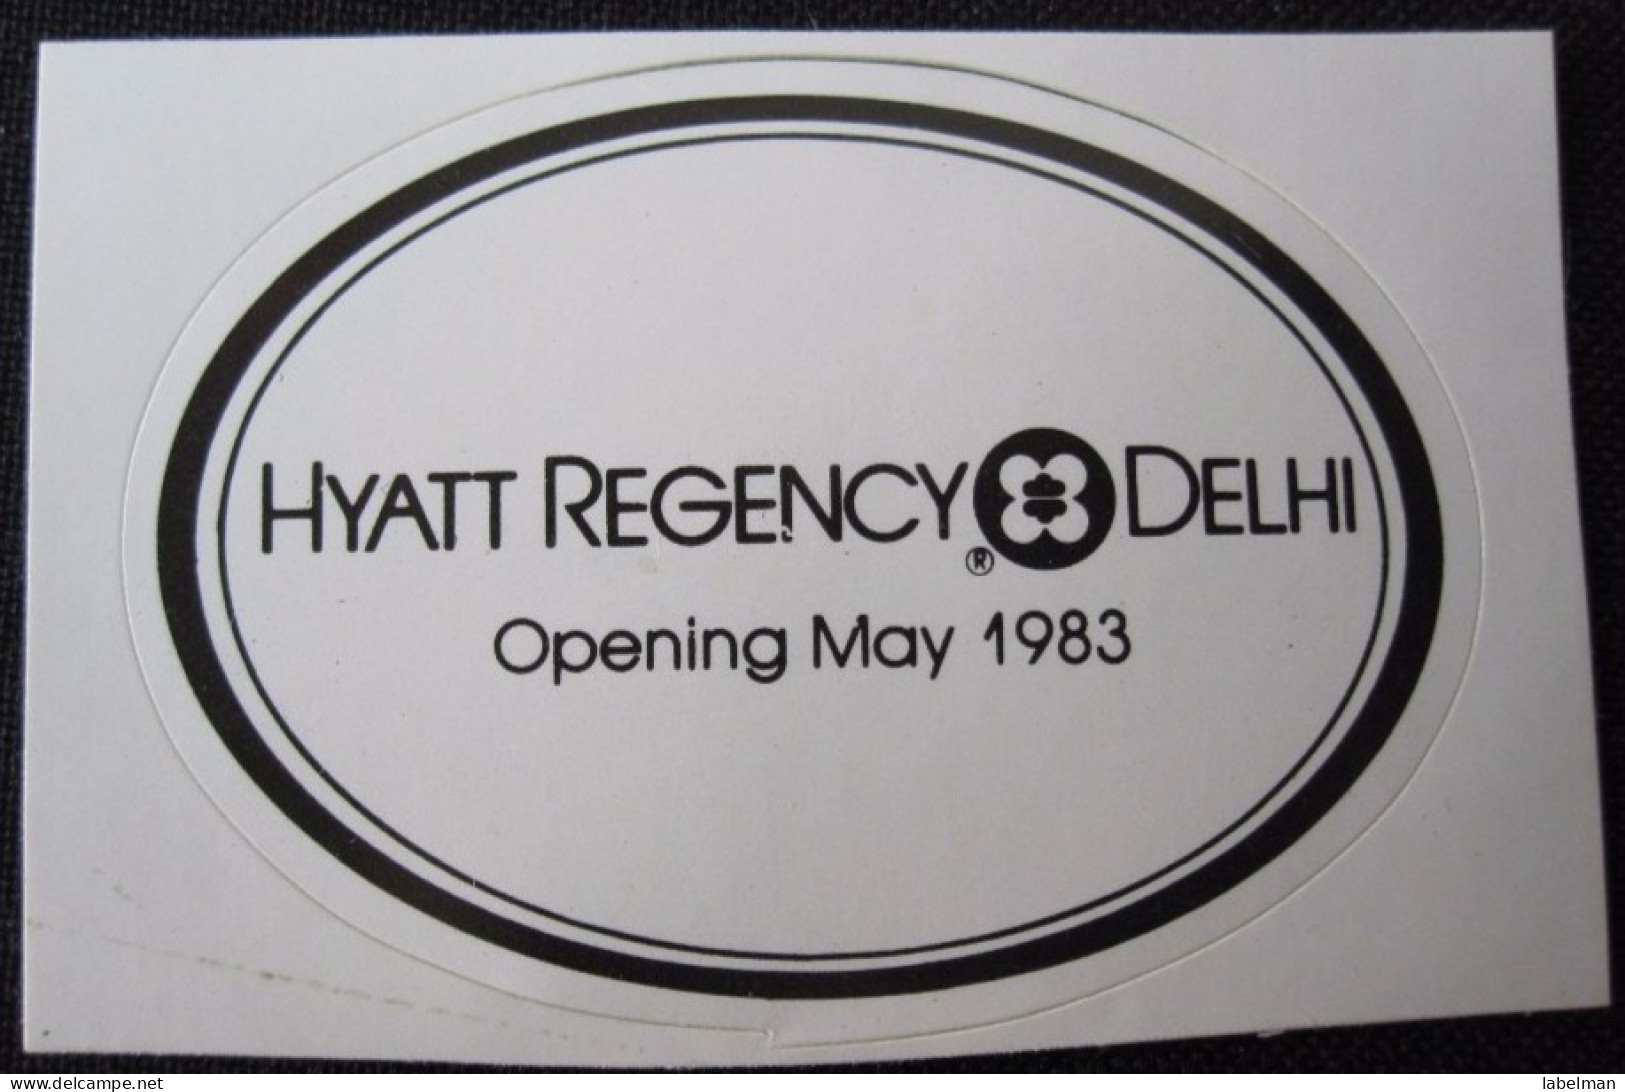 HOTEL MOTEL INN MINI HYATT REGENCY CALCUTTA NEW DELHI BOMBAY INDIA DECAL STICKER LUGGAGE LABEL ETIQUETTE AUFKLEBER - Hotel Labels